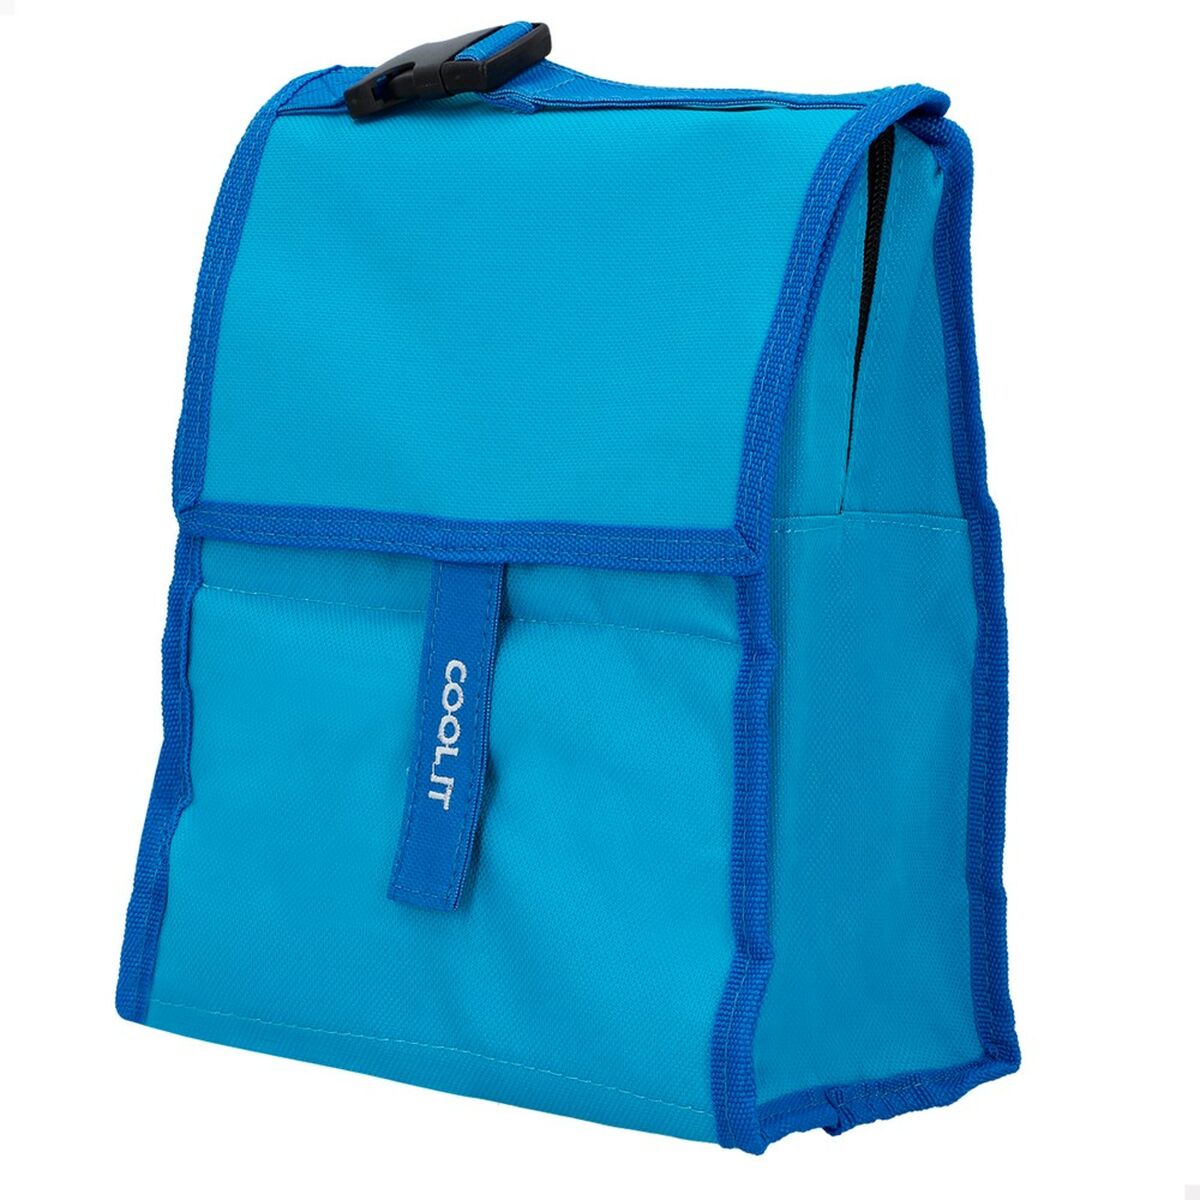 Cool Bag Aktive Cool it (12 Units) Blue Freezable